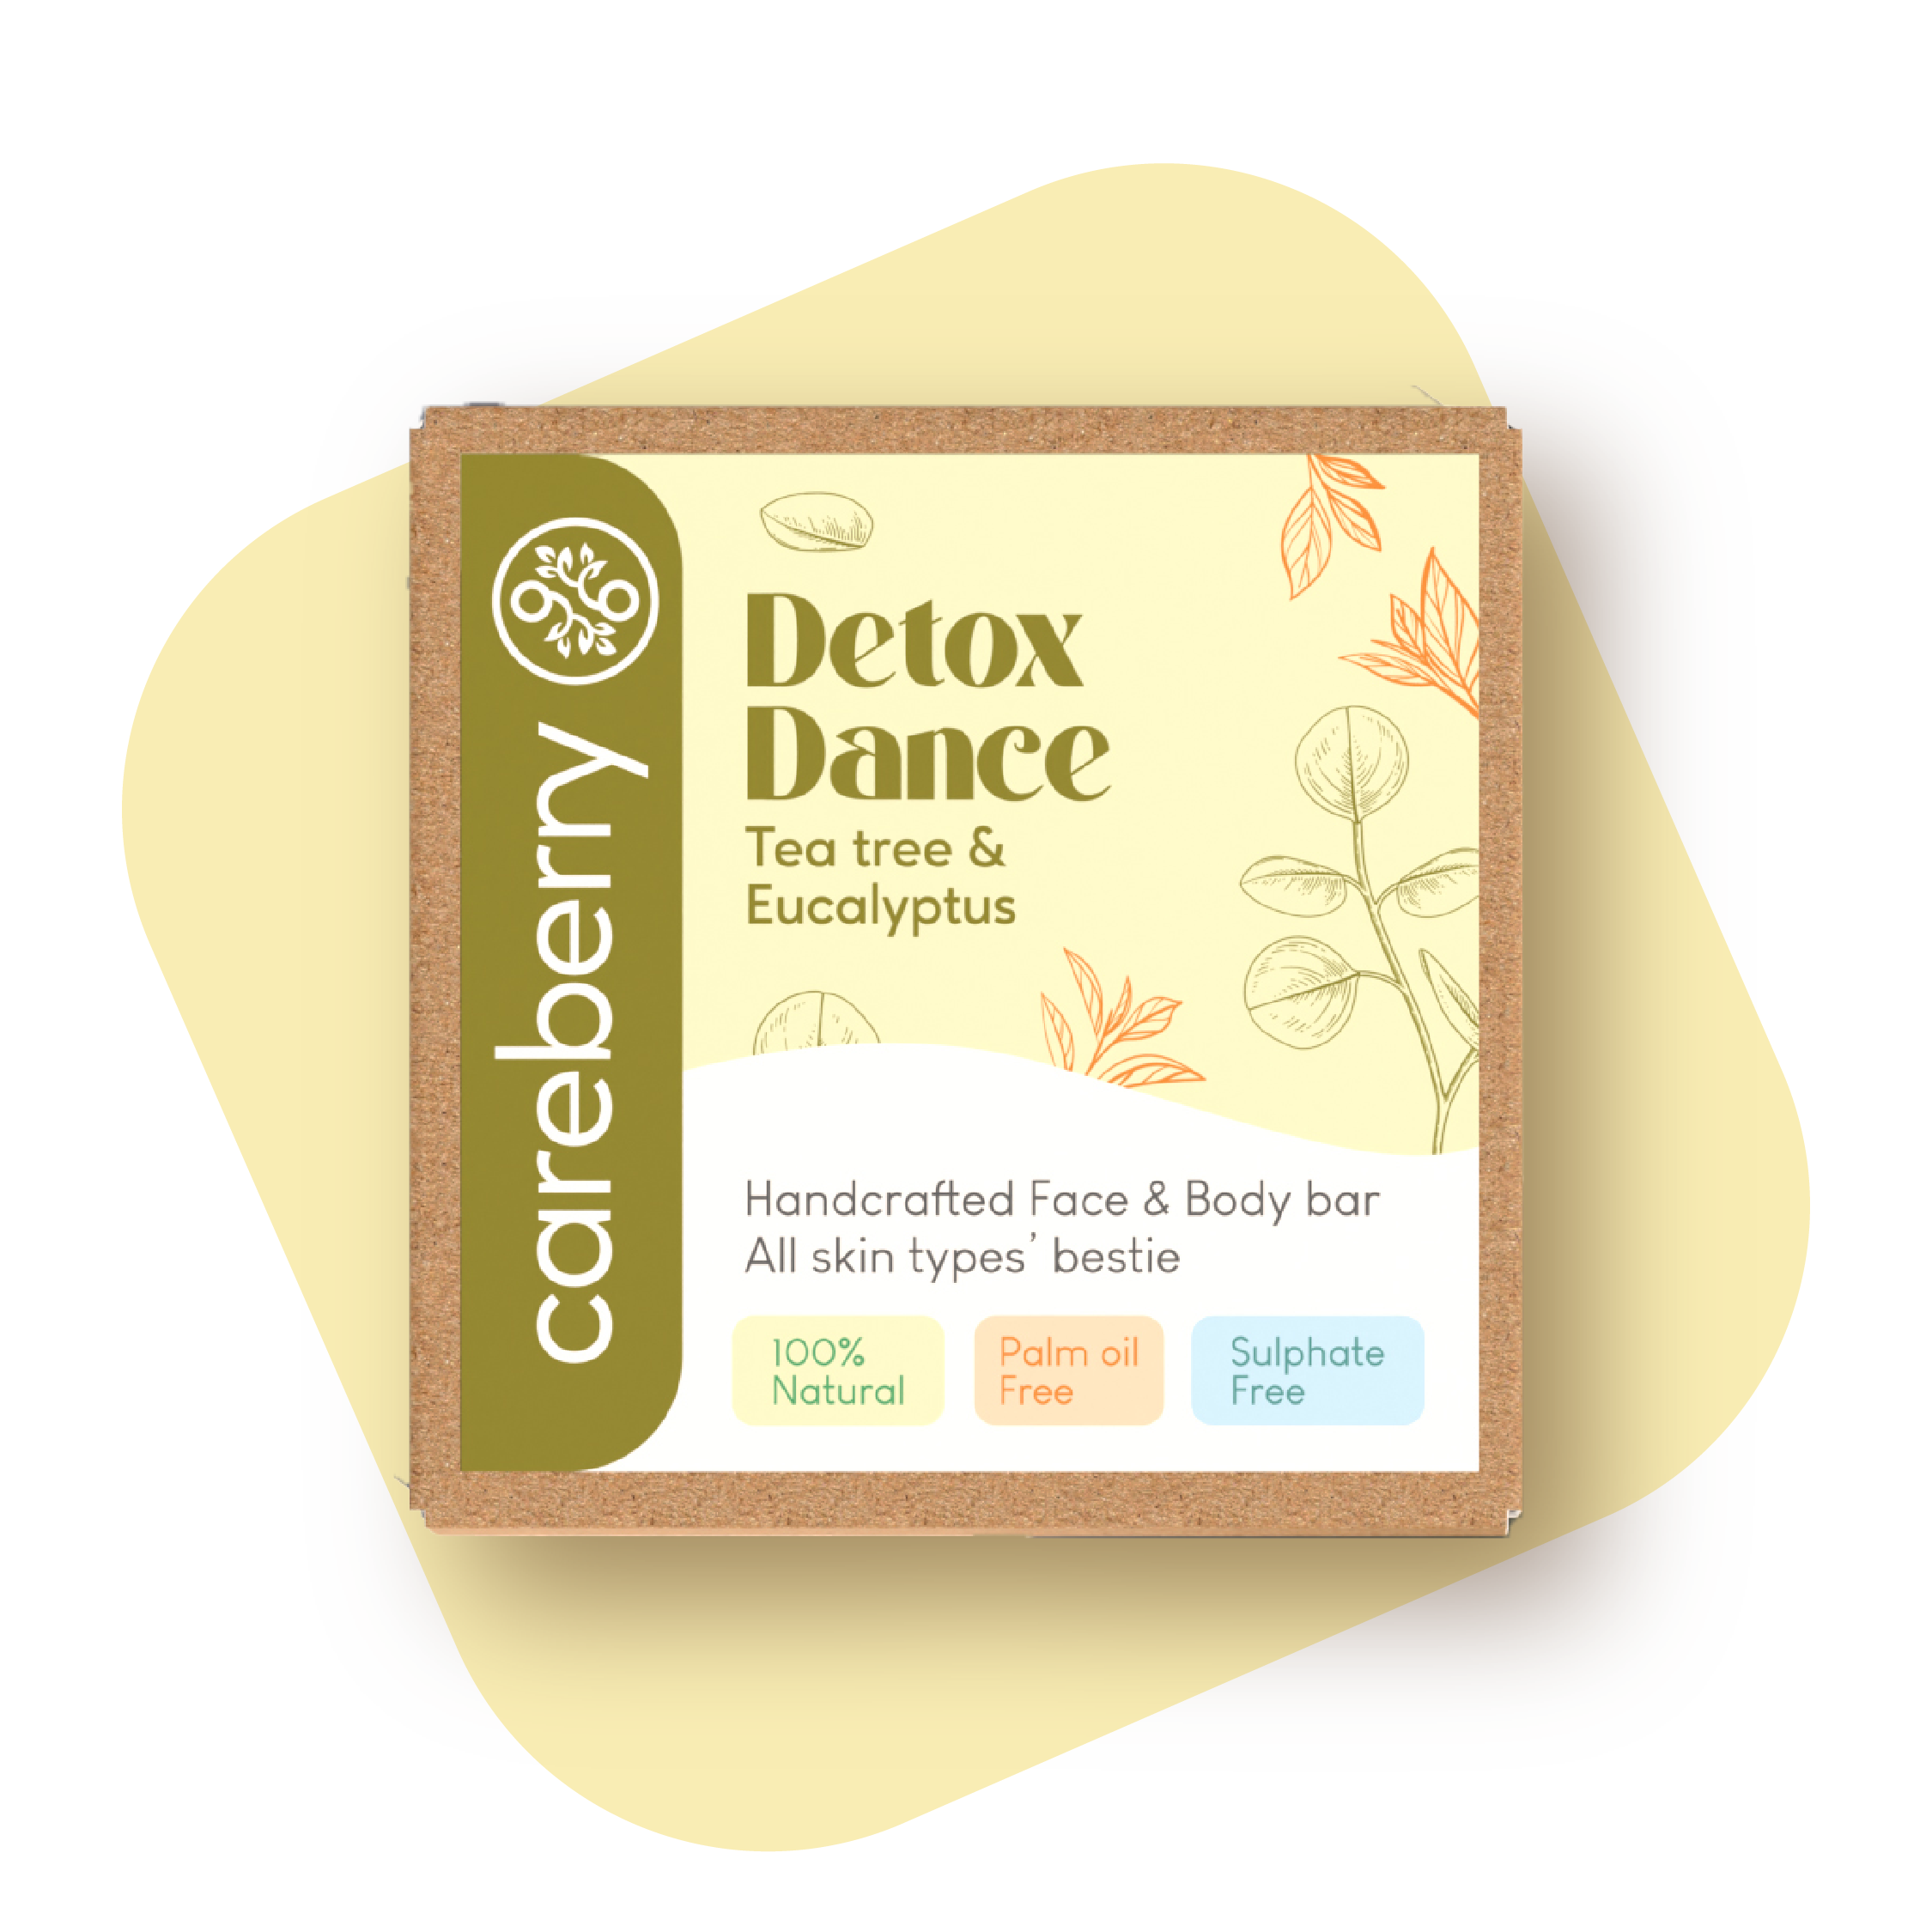 Detox Dance: Tea Tree & Eucalyptus Face & Body Bar